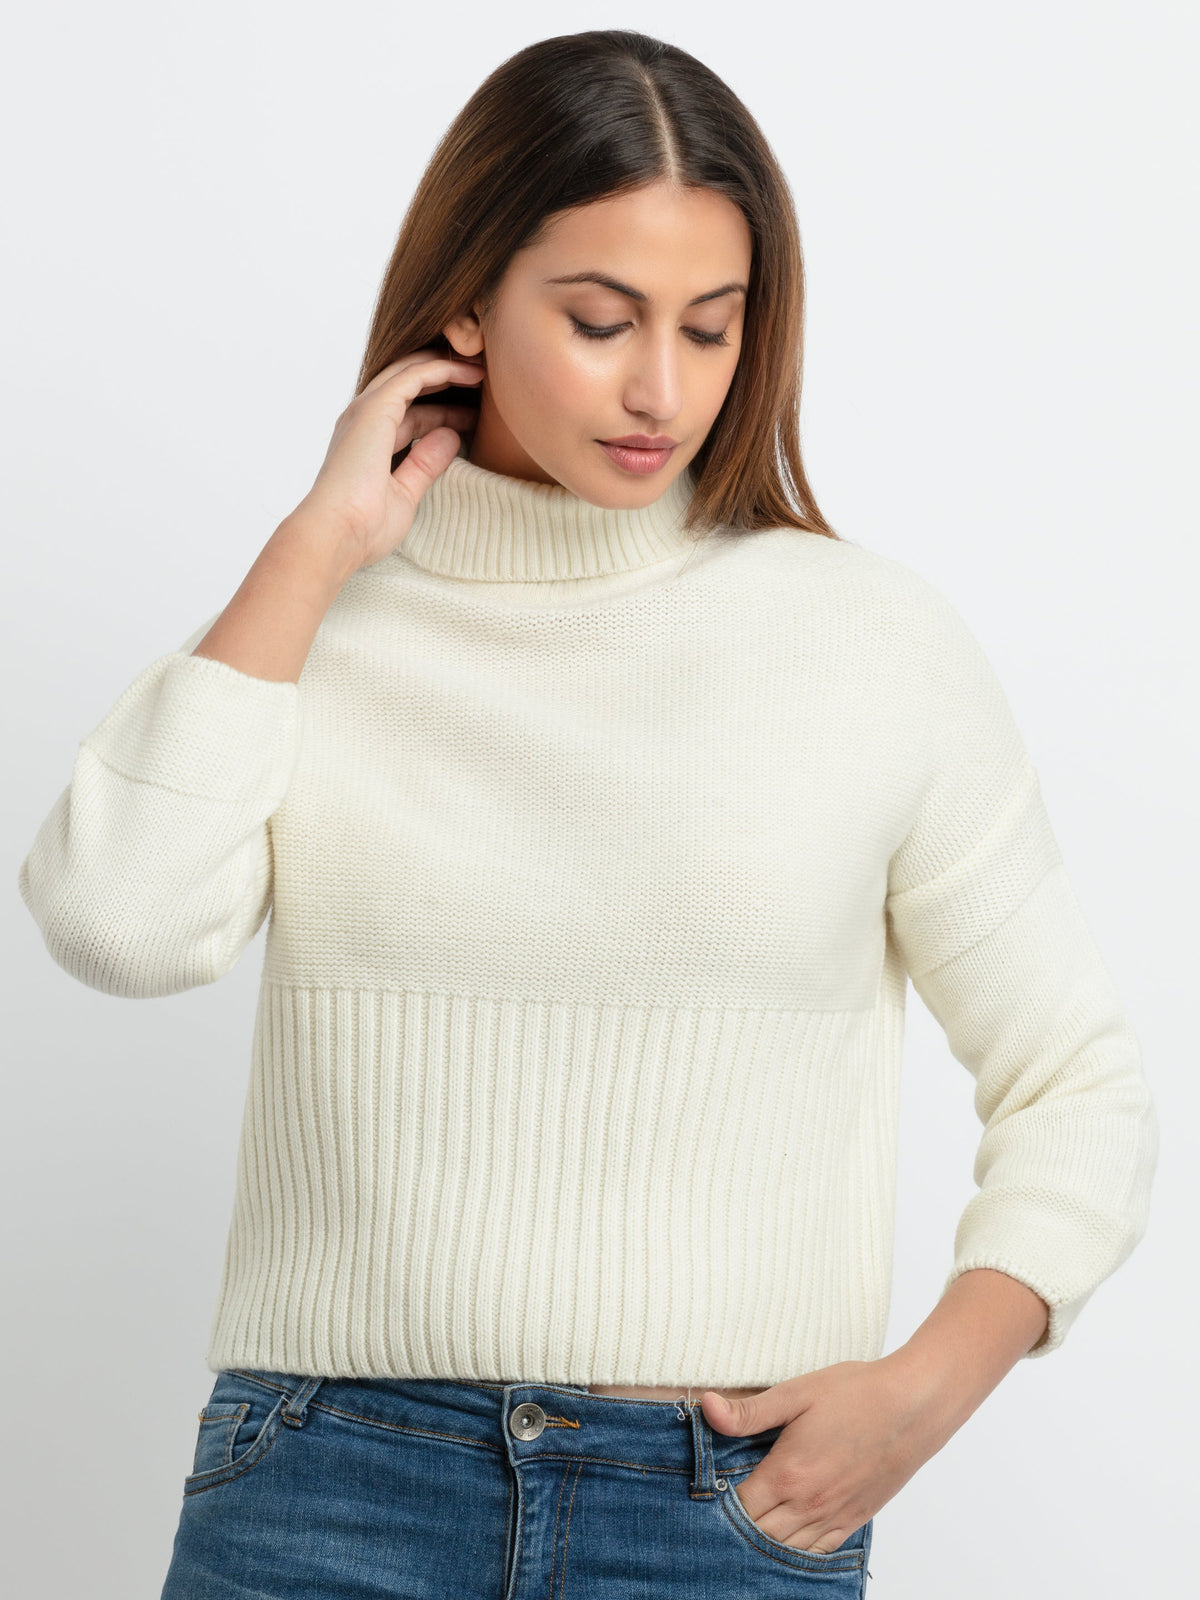 white turtleneck sweater